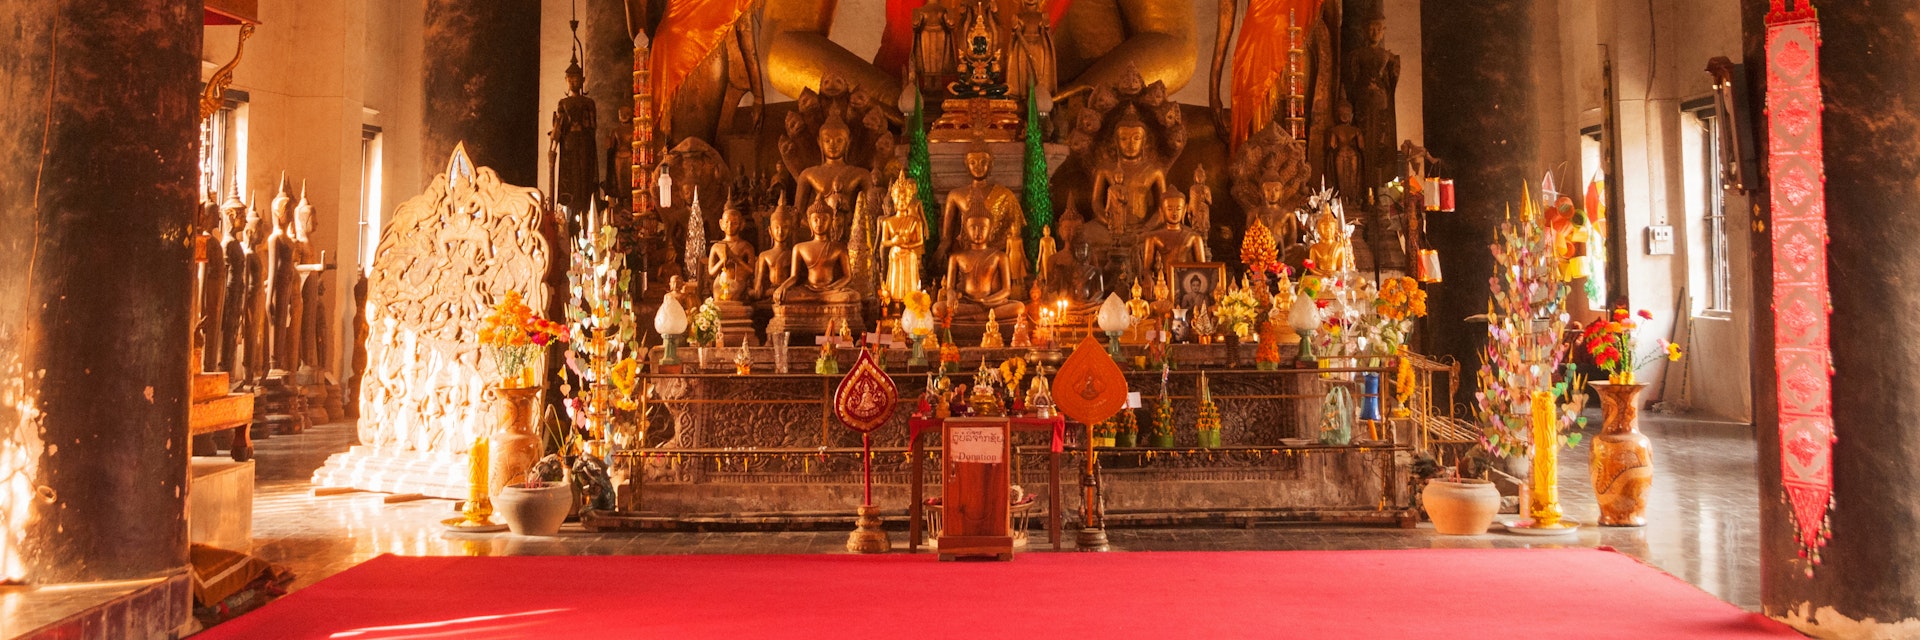 Wat Wisunarat (Wat Visoun), interior Buddha figure